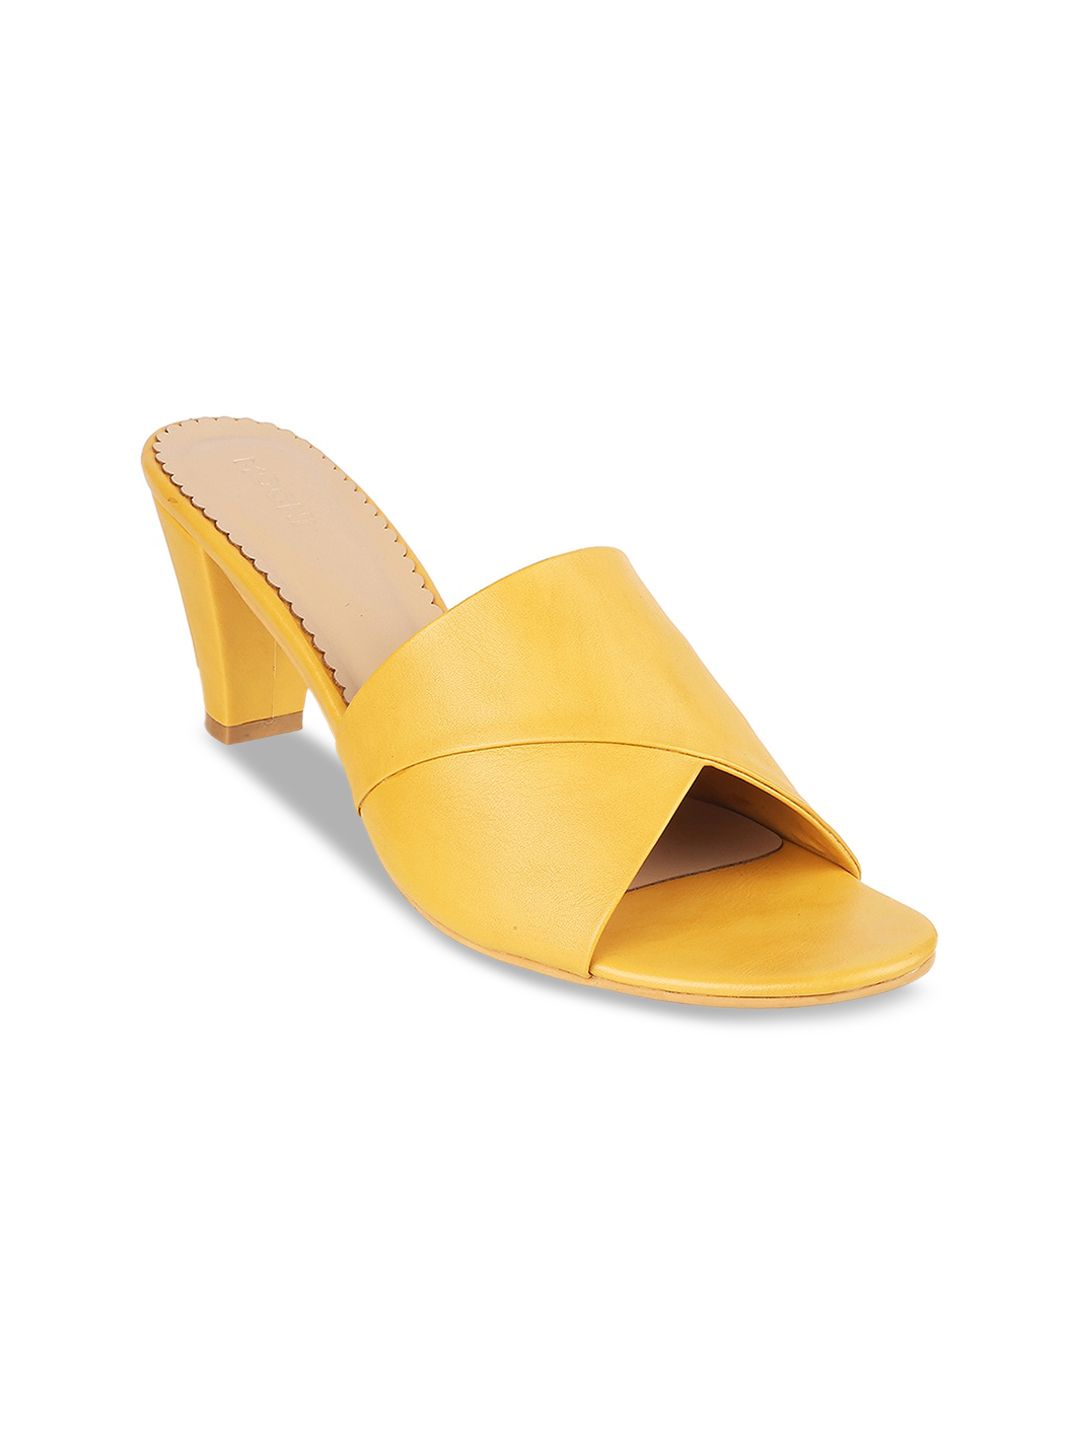 Mochi Yellow Block Sandals Price in India